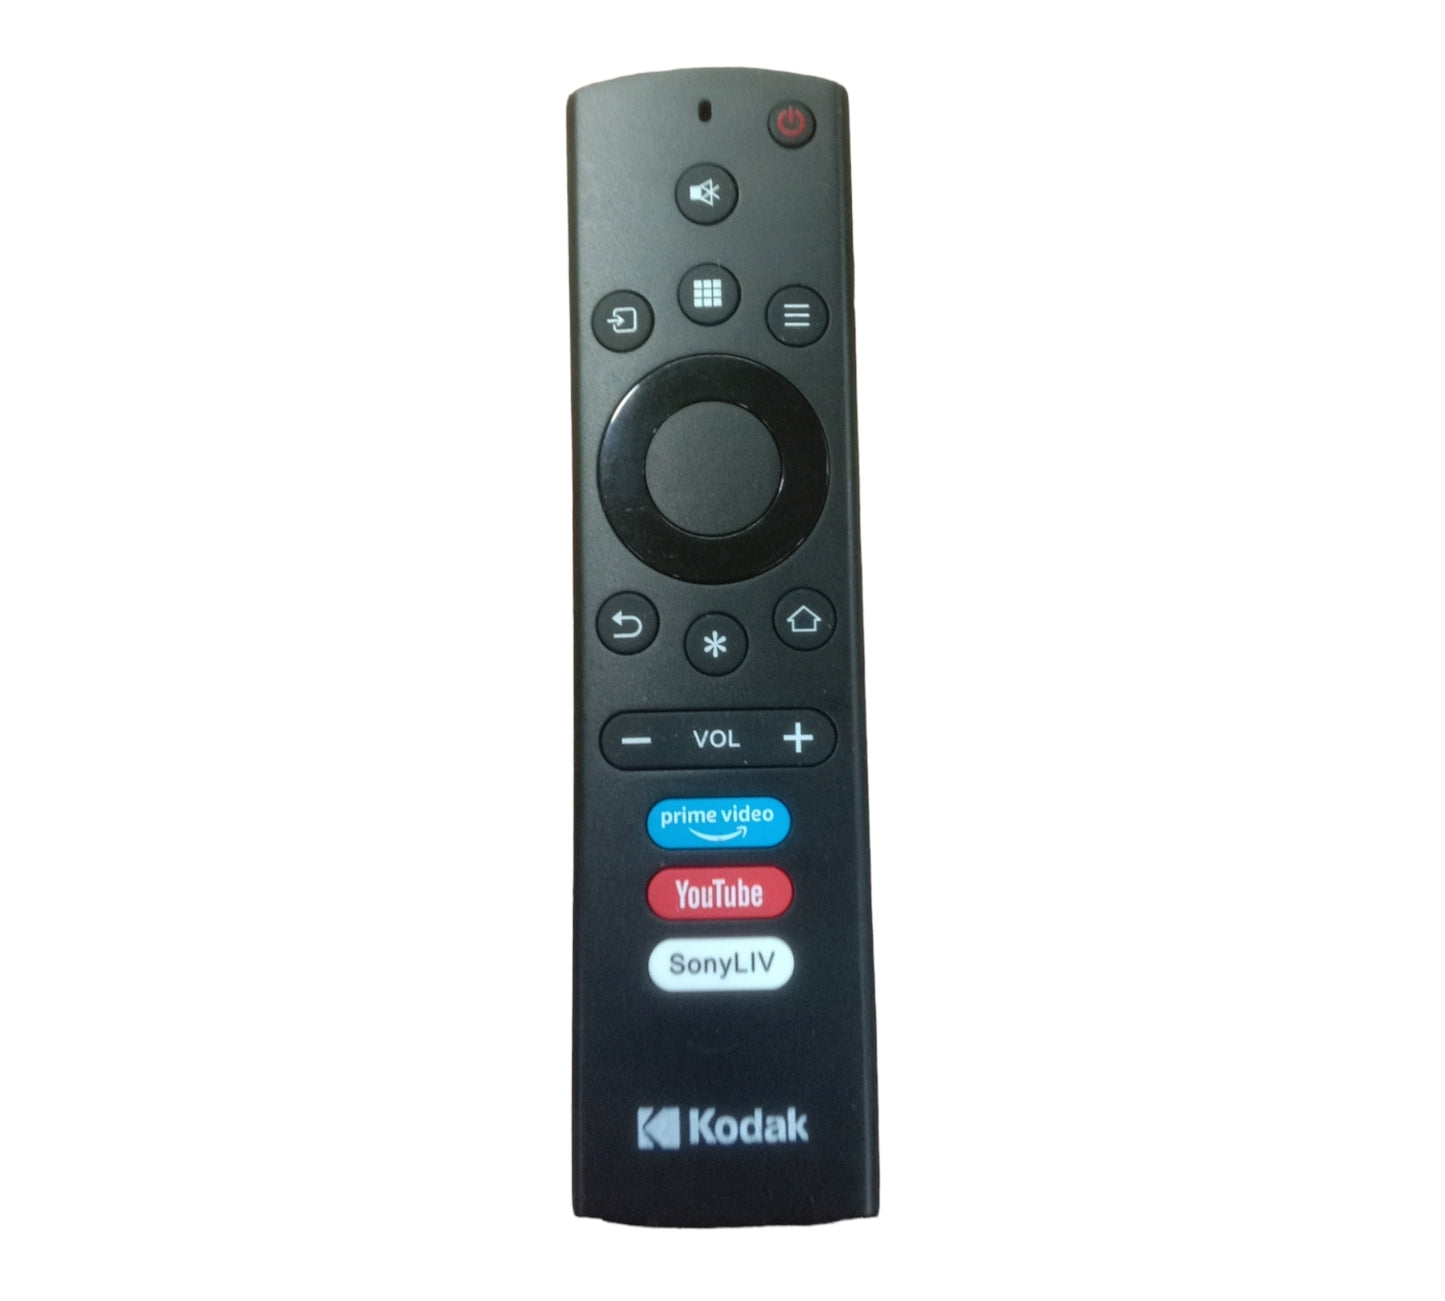 kodak smart tv remote control Youtube,prime video,sony liv